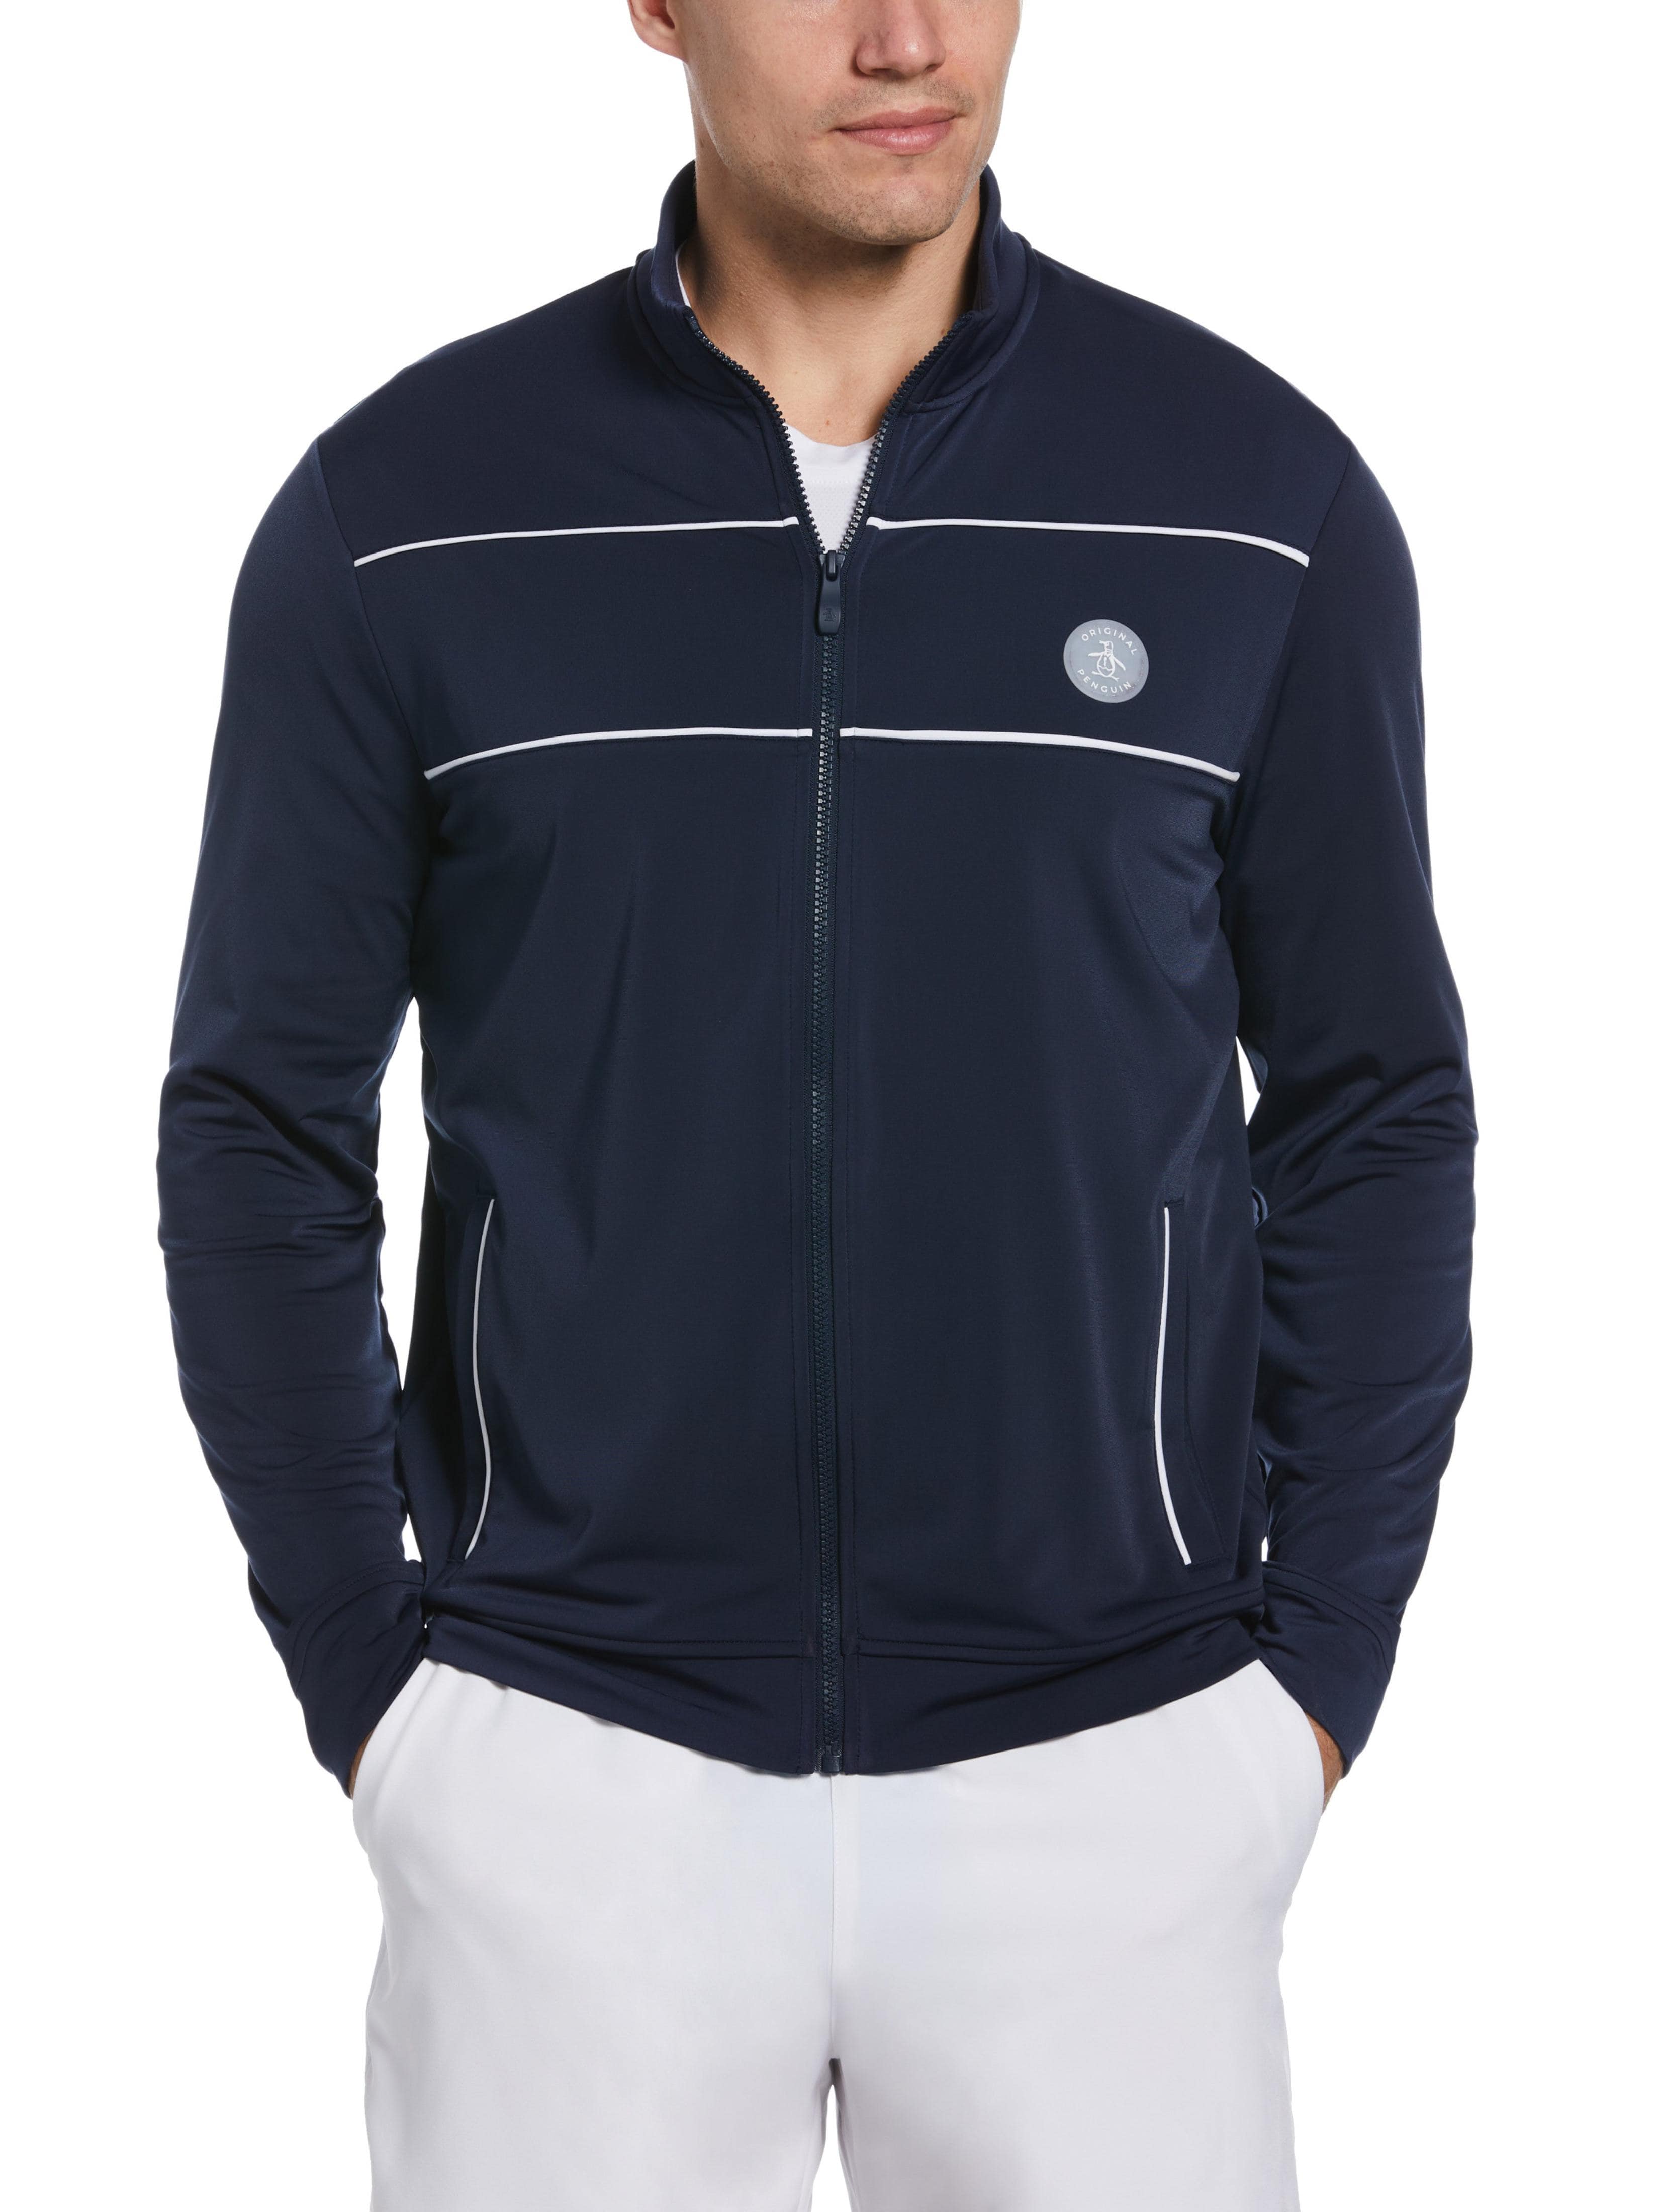 Original Penguin Mens Essential Tennis Track Jacket Top, Size Medium, Dark Navy Blue, Polyester/Elastane | Golf Apparel Shop